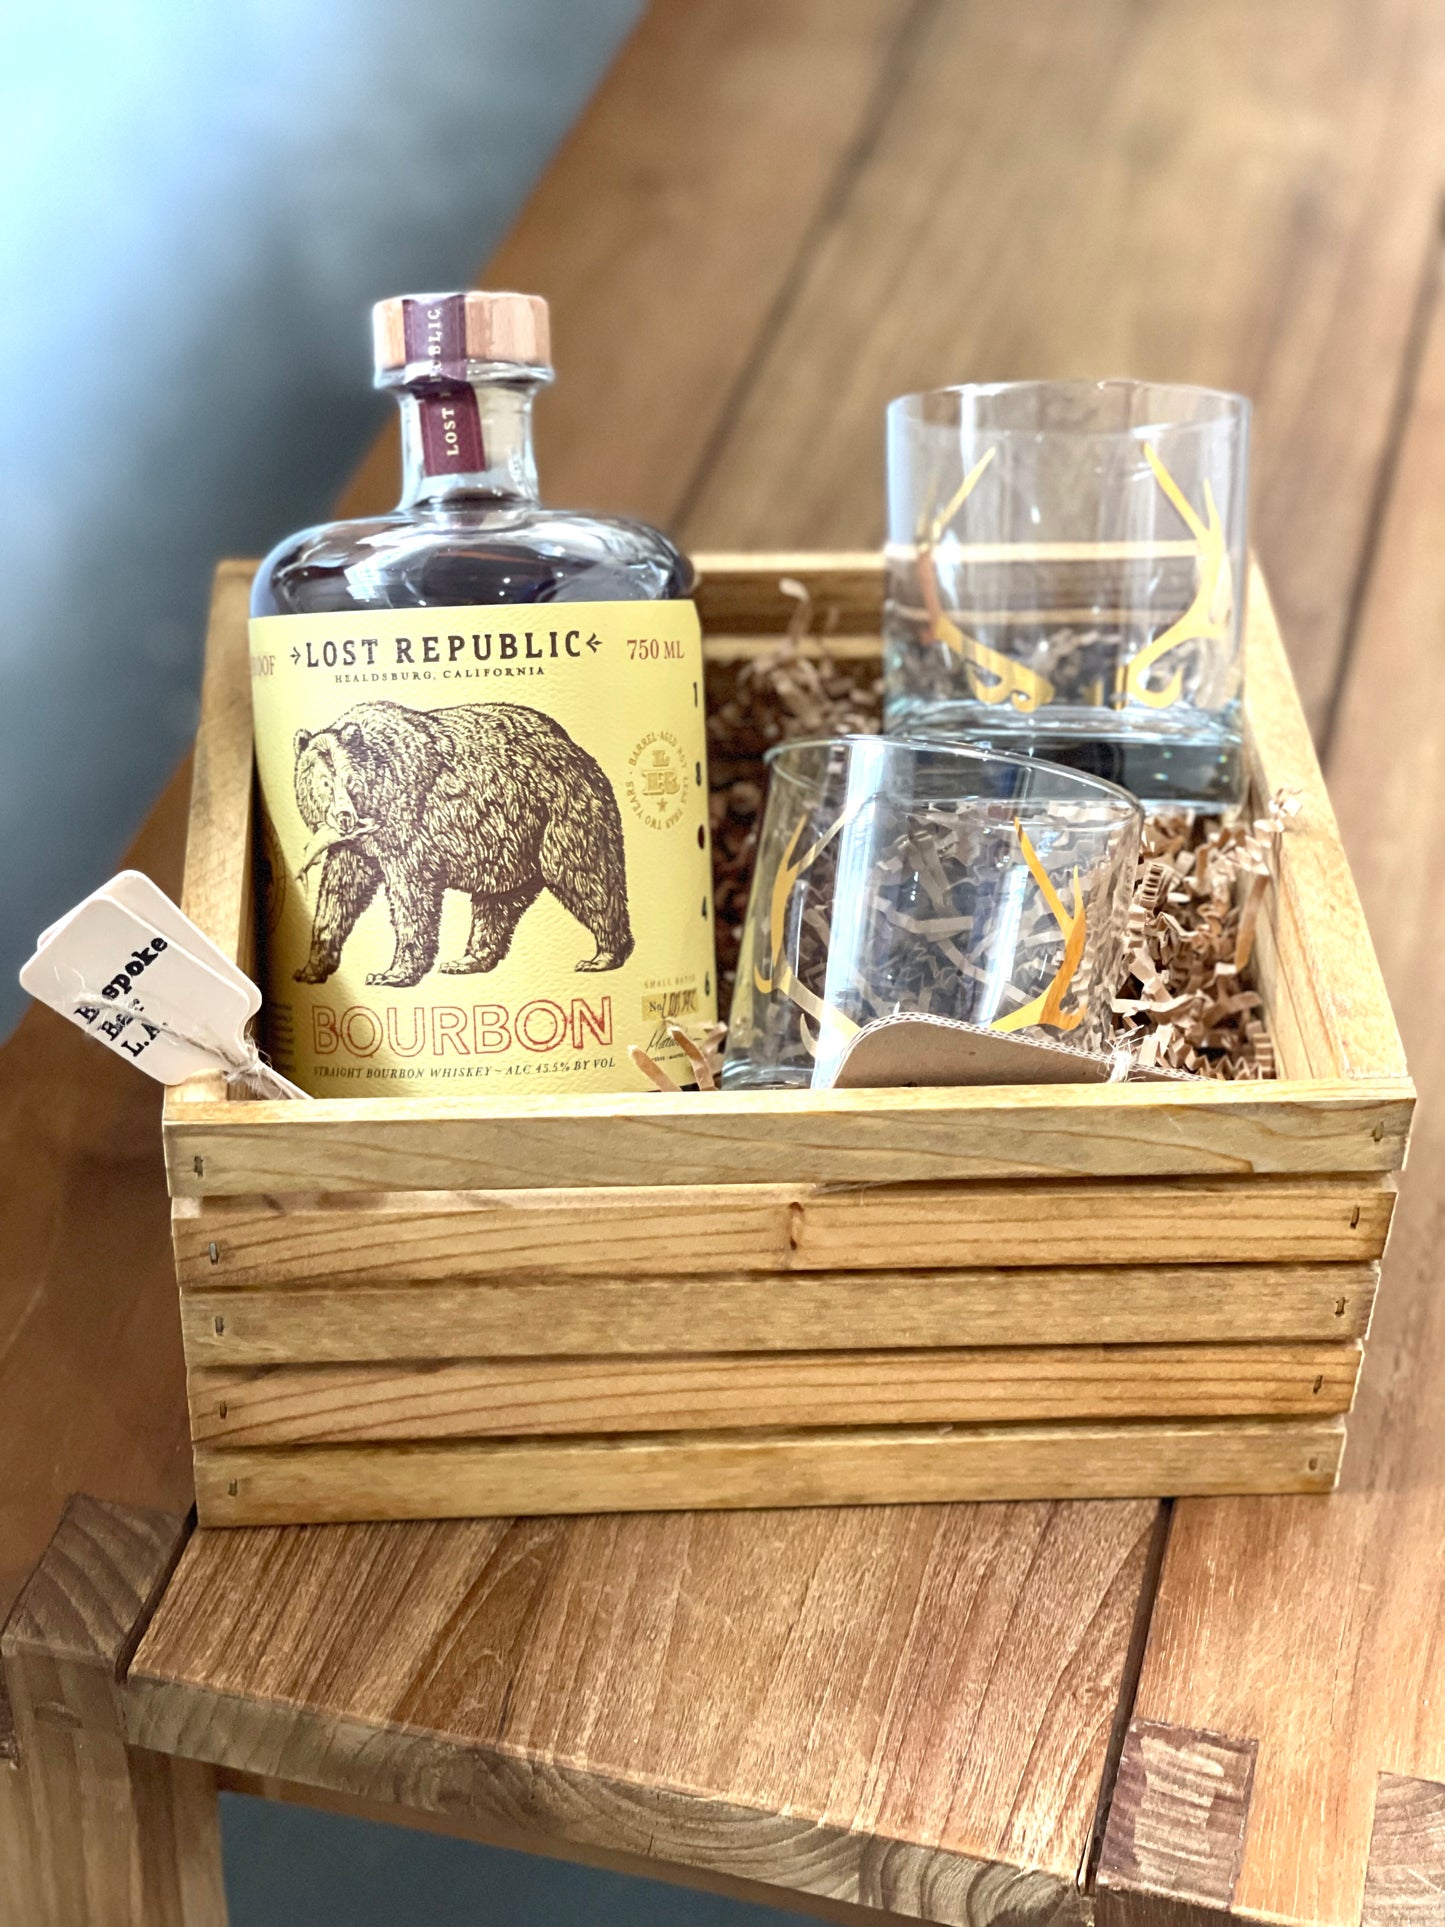 The Bourbon Glass Box